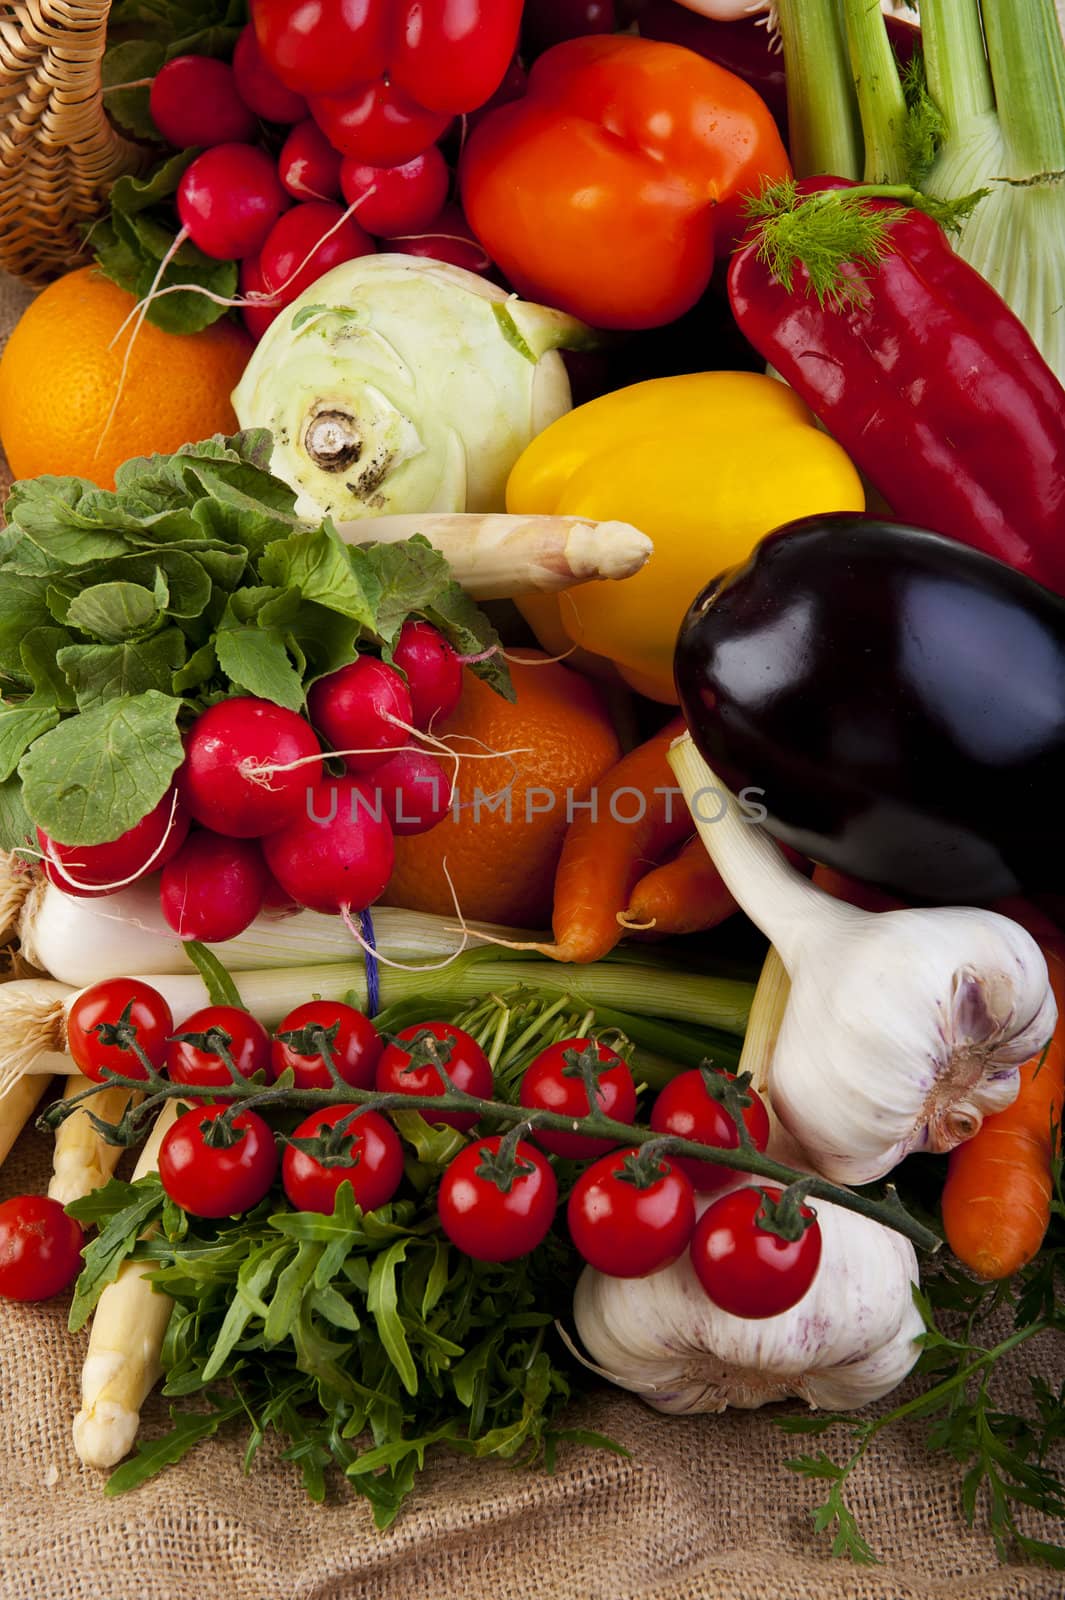 Assortment of various fresh organic vegetables from the garden